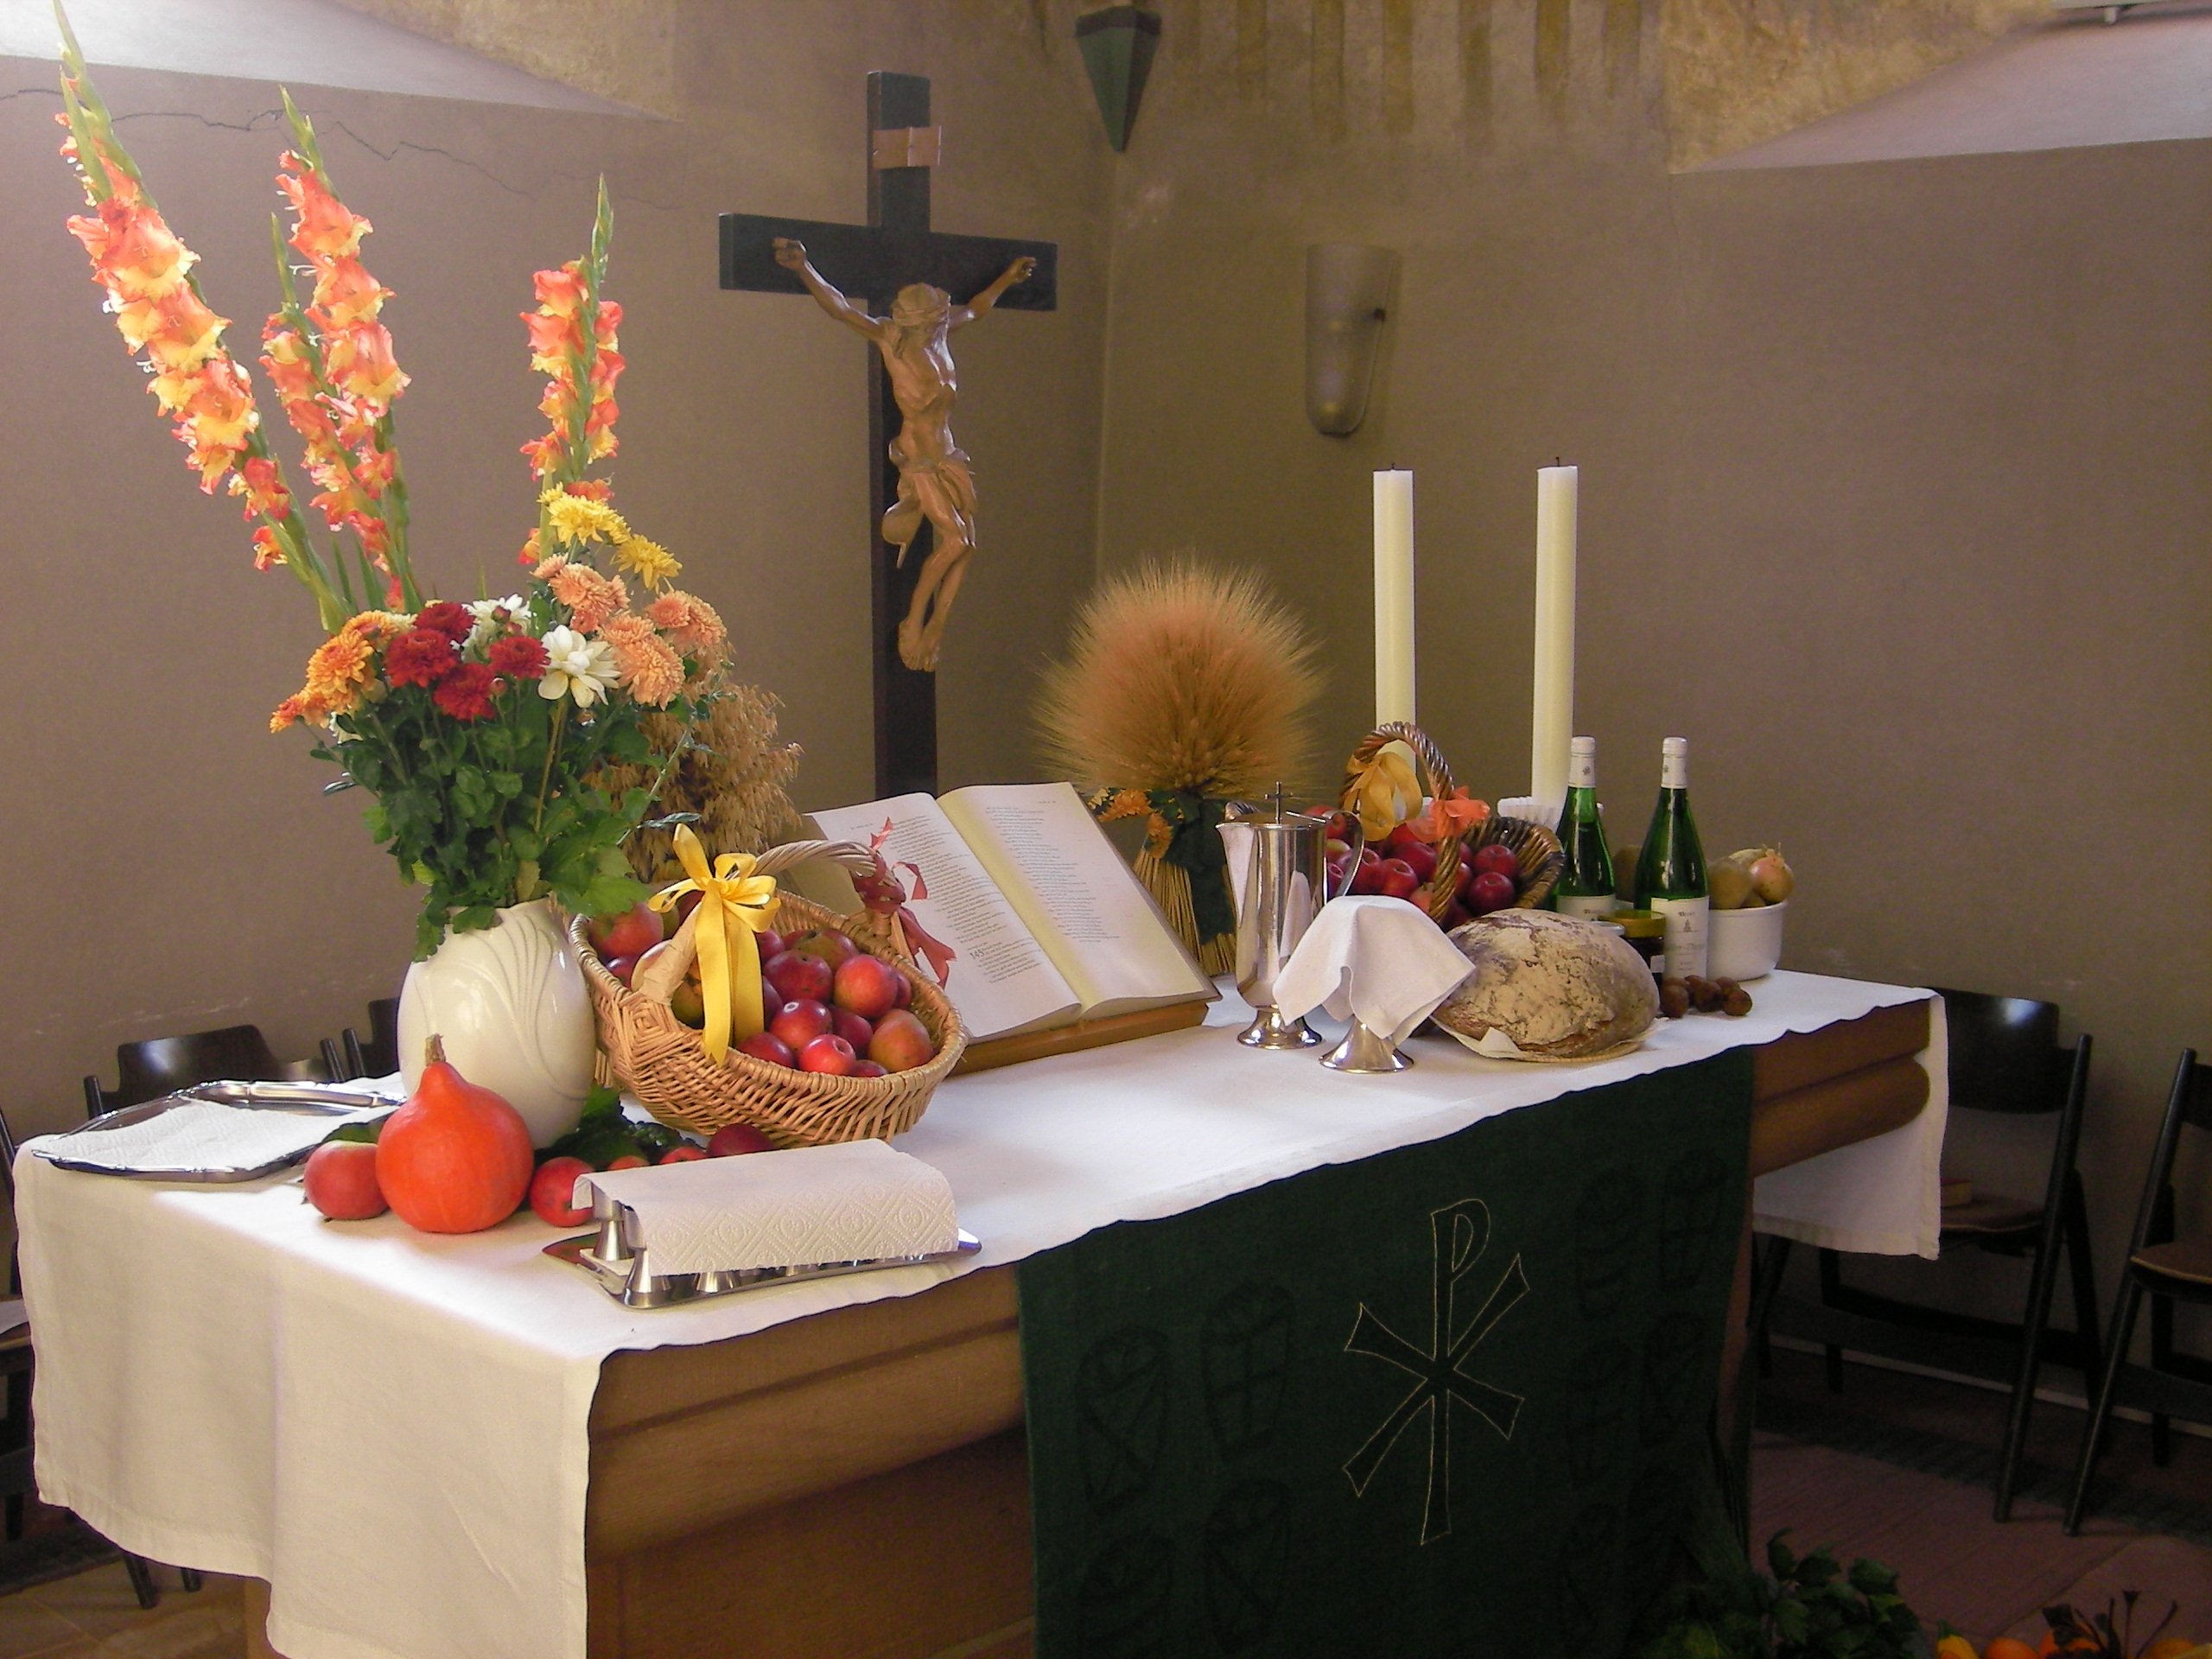 Erntedank-Altar